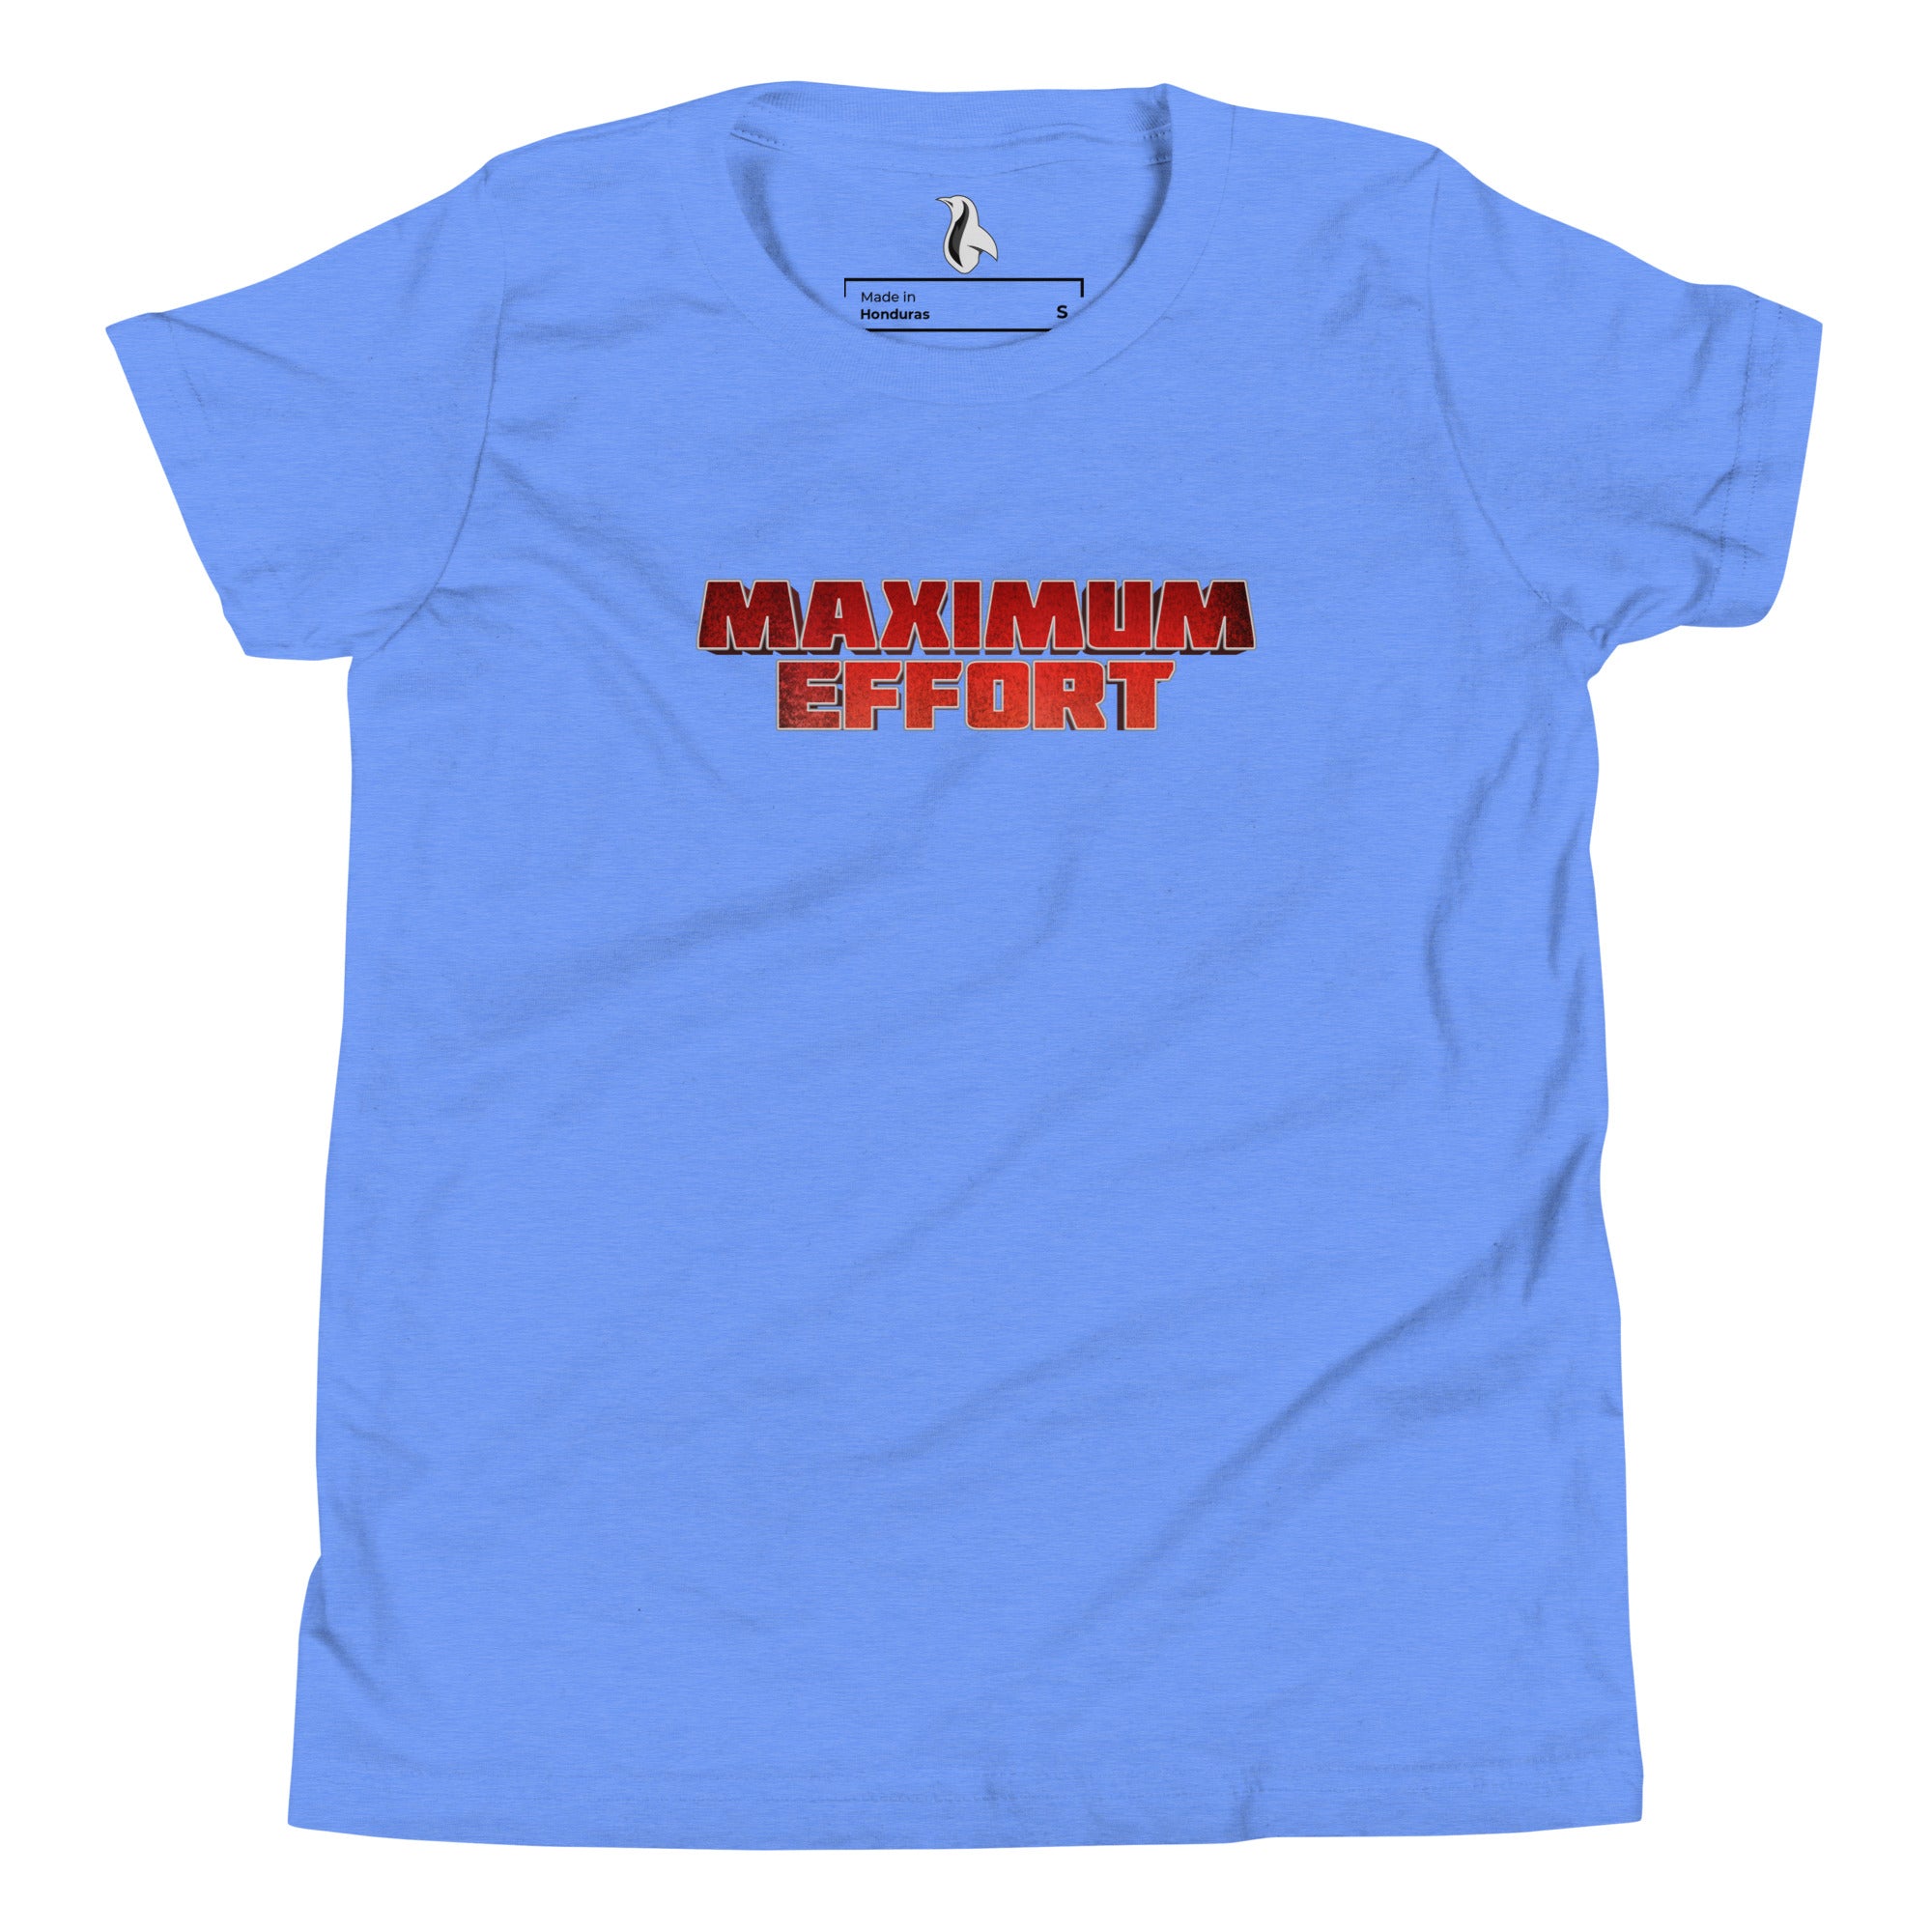 Maximum Effort Youth Short Sleeve T-Shirt